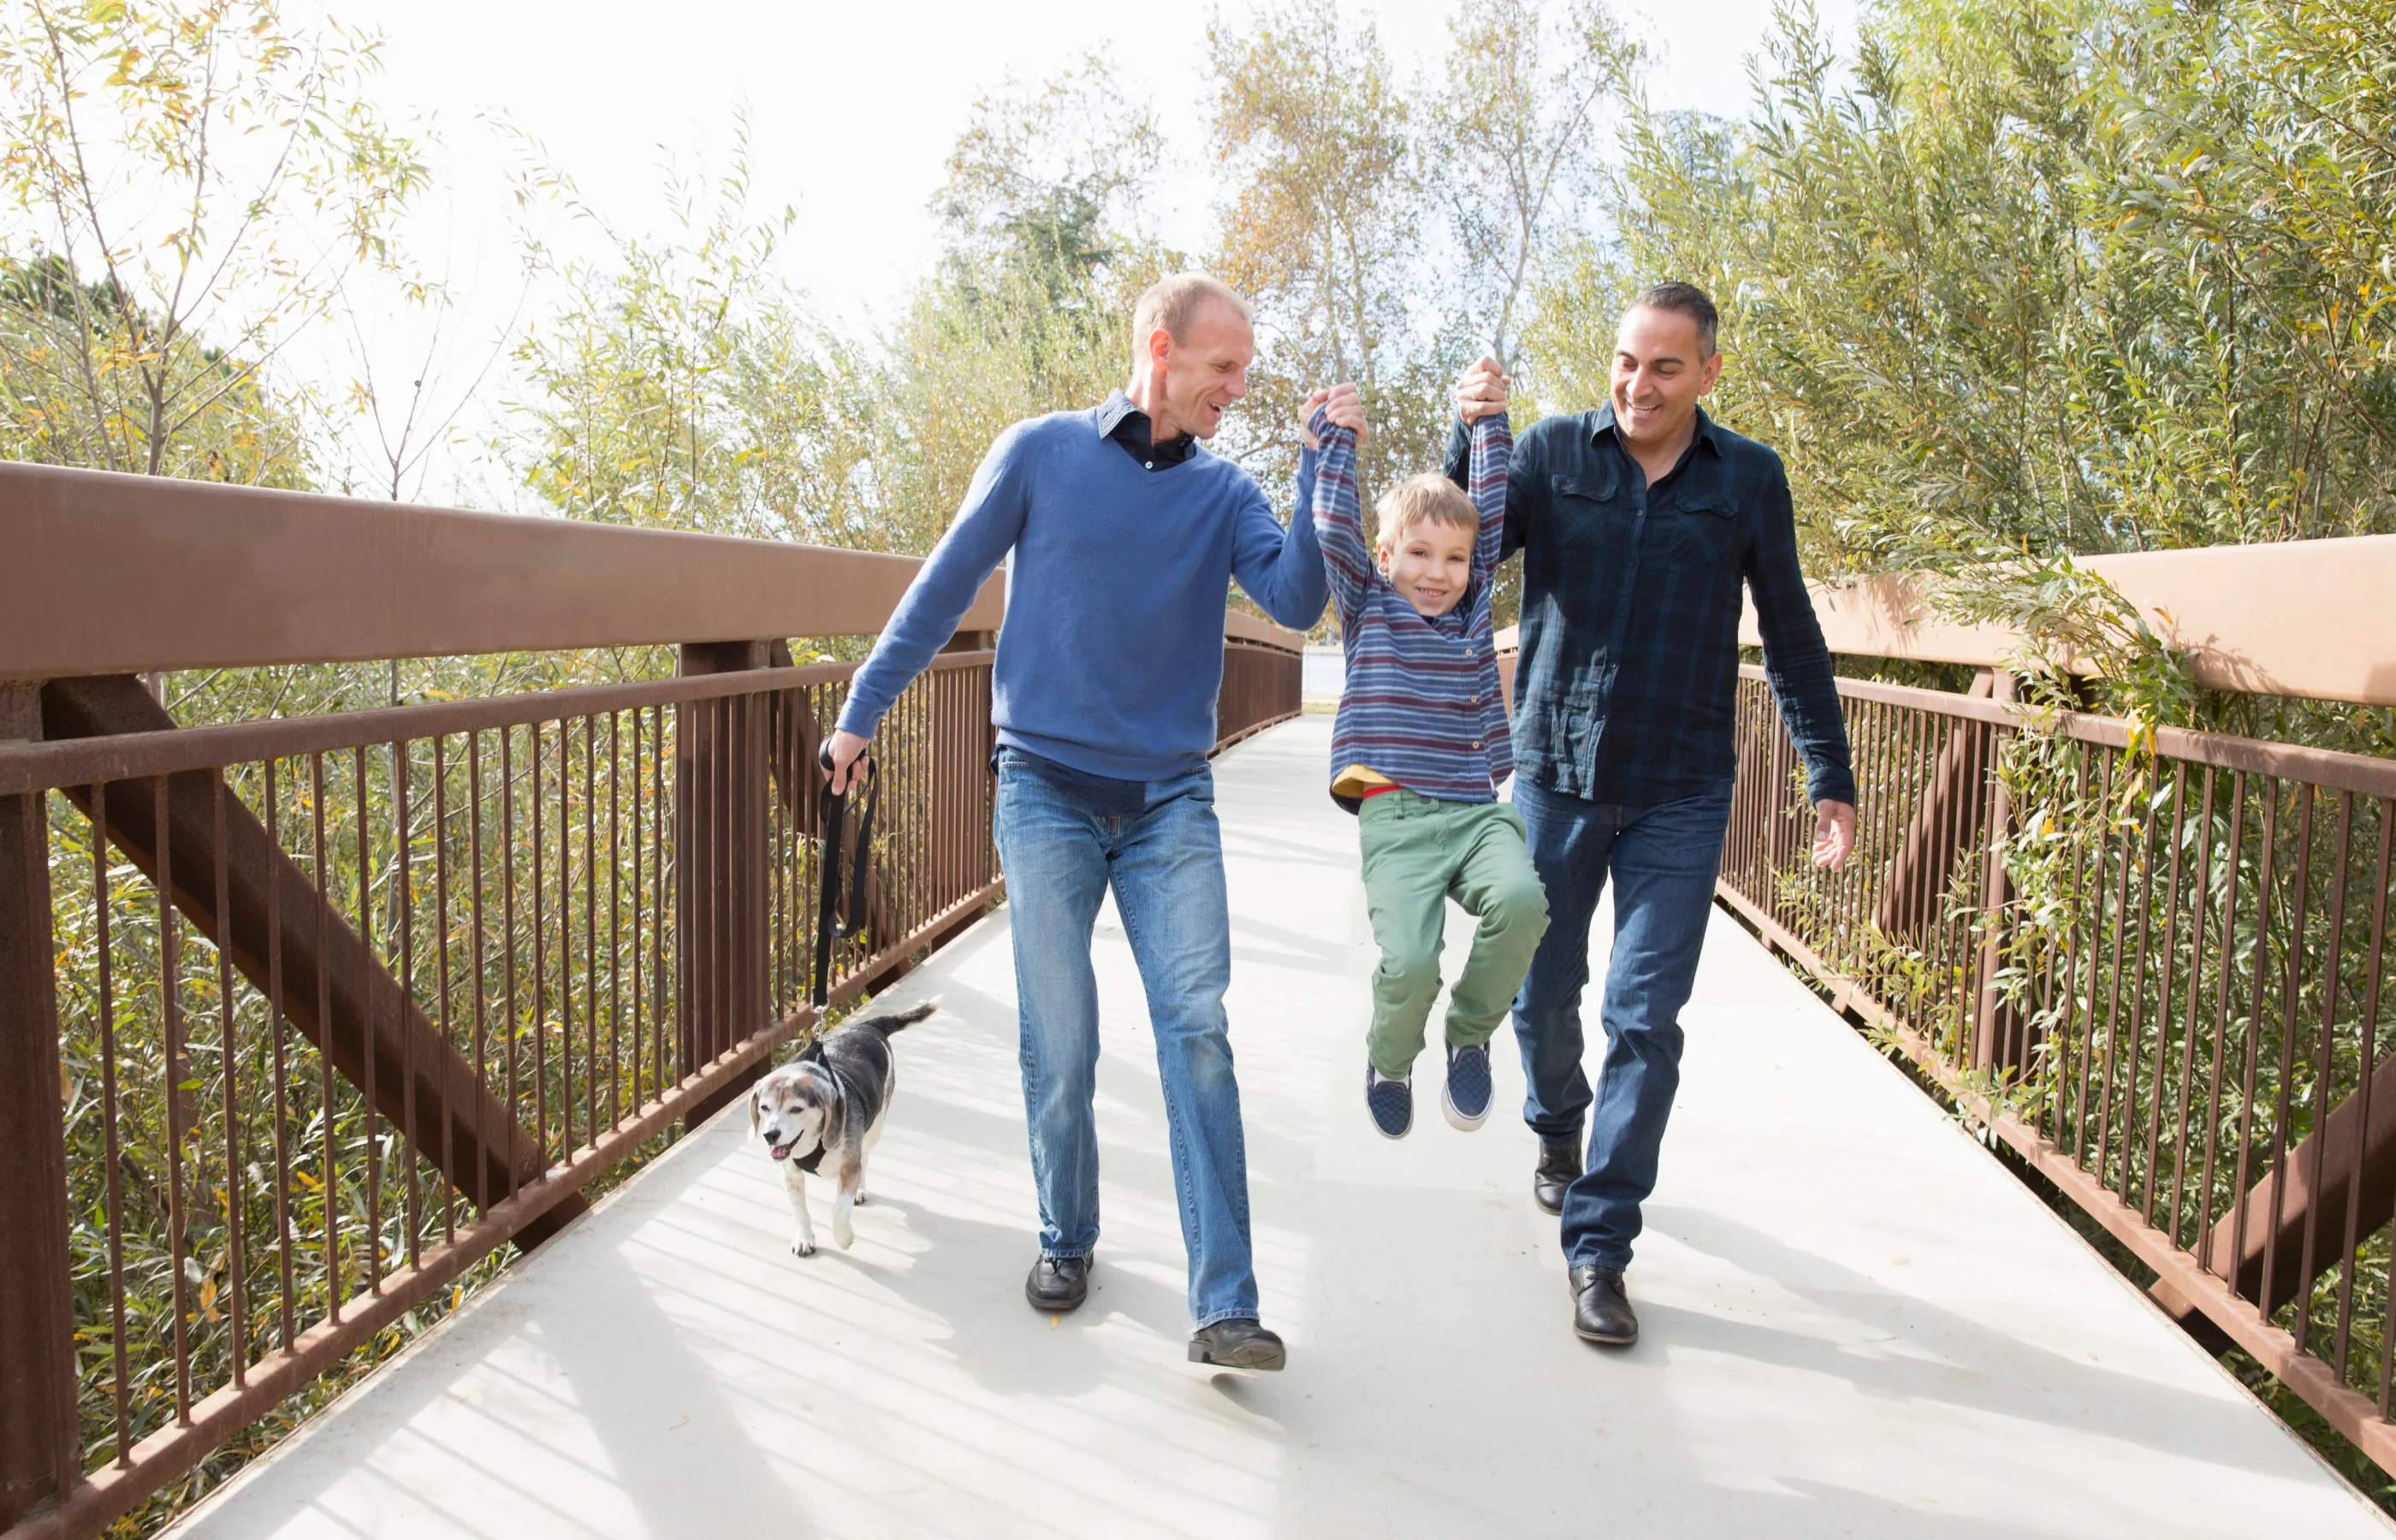 LGBTG family walking over a bridge smiling child.